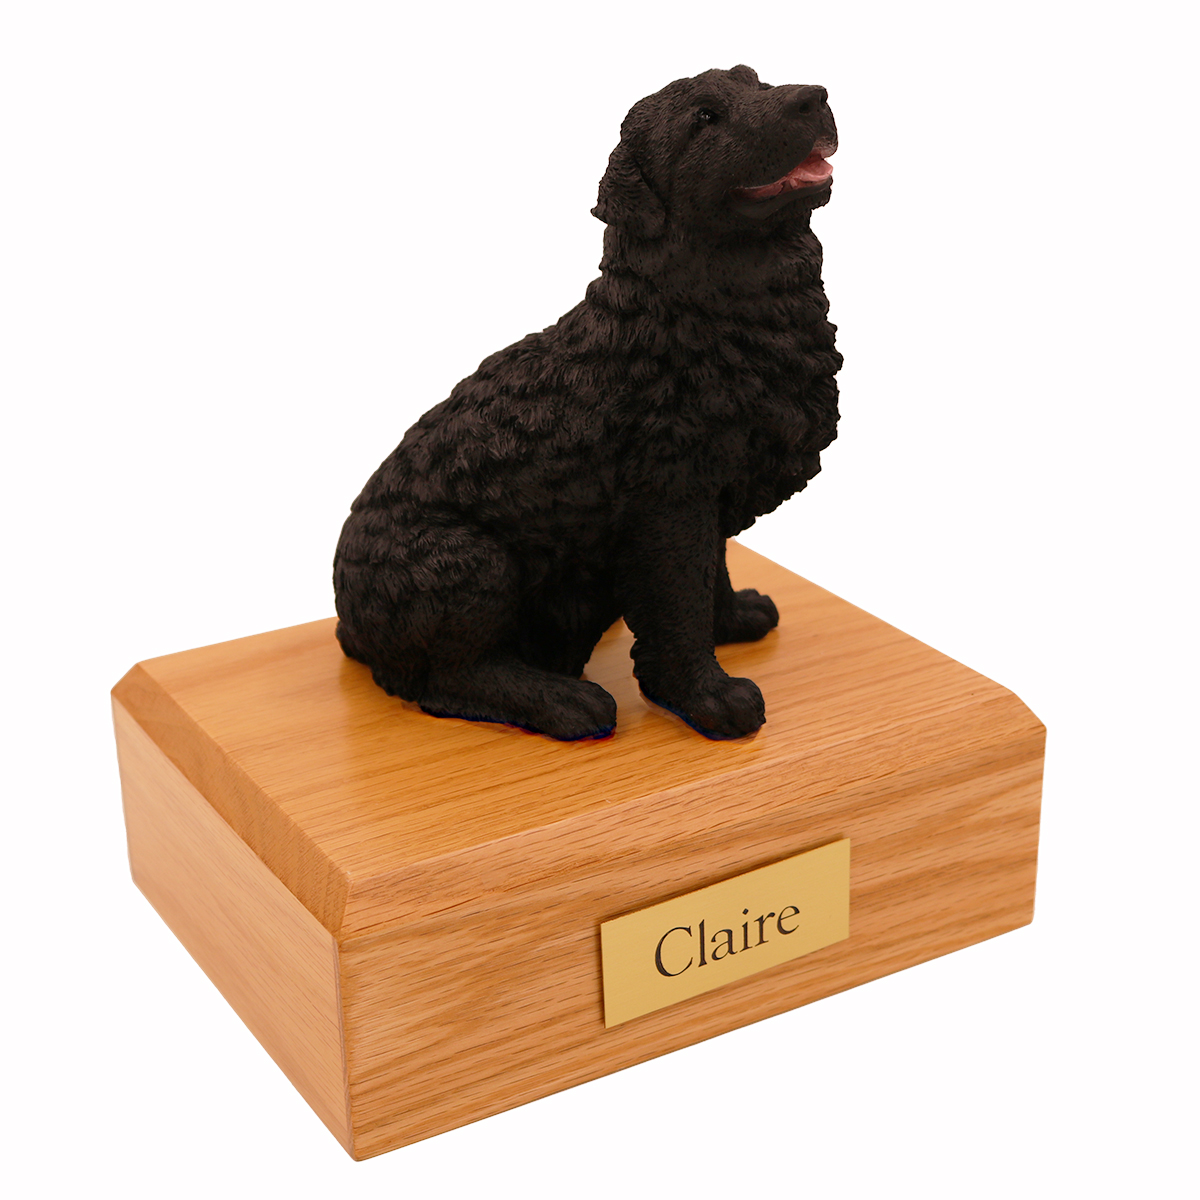 Dog, Newfoundland, Black - Figurine Urn